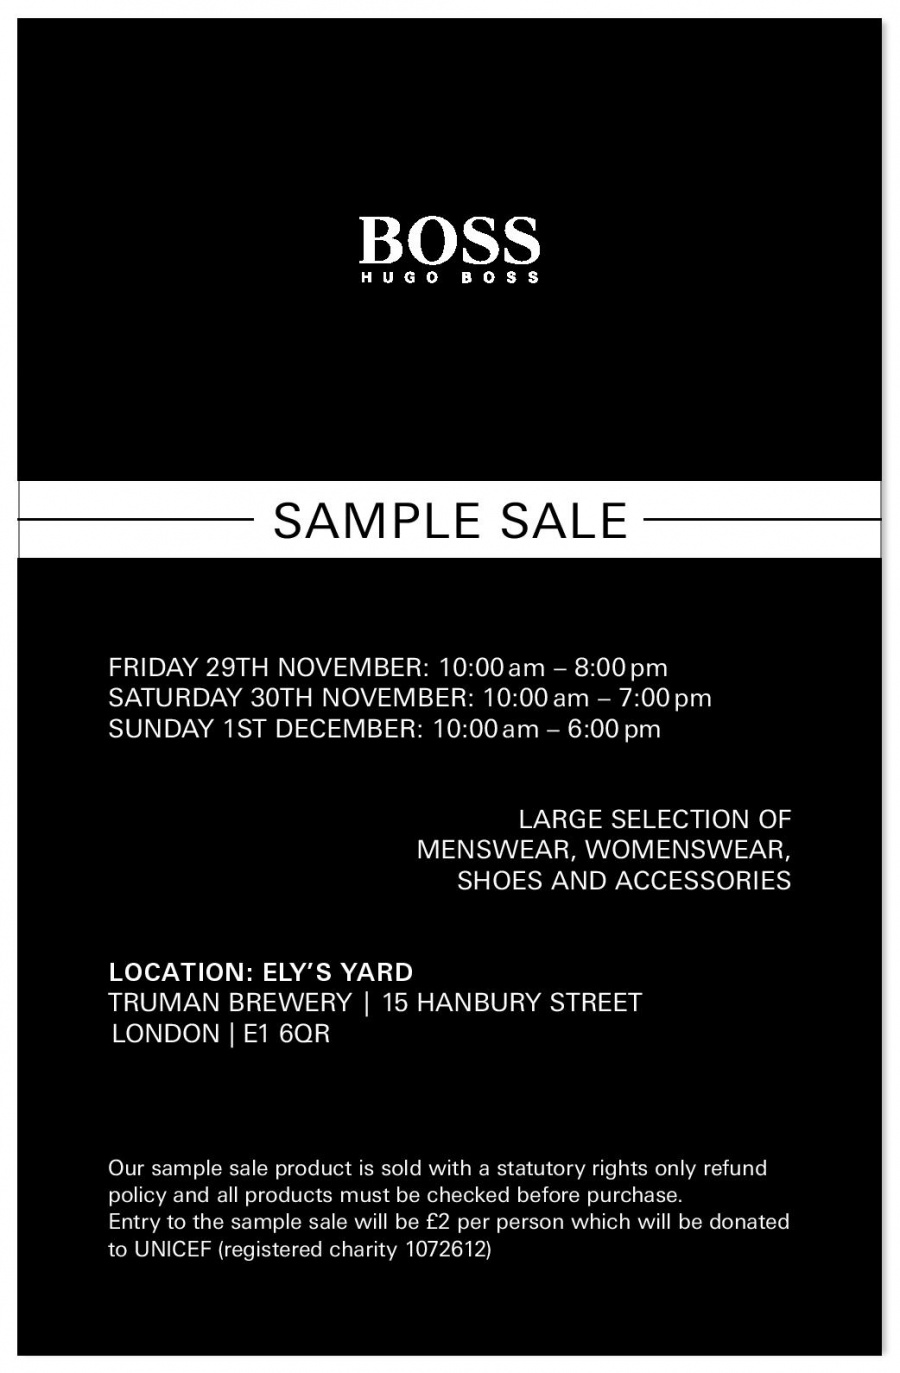 Hugo Boss Sample Sale Sample sale in London